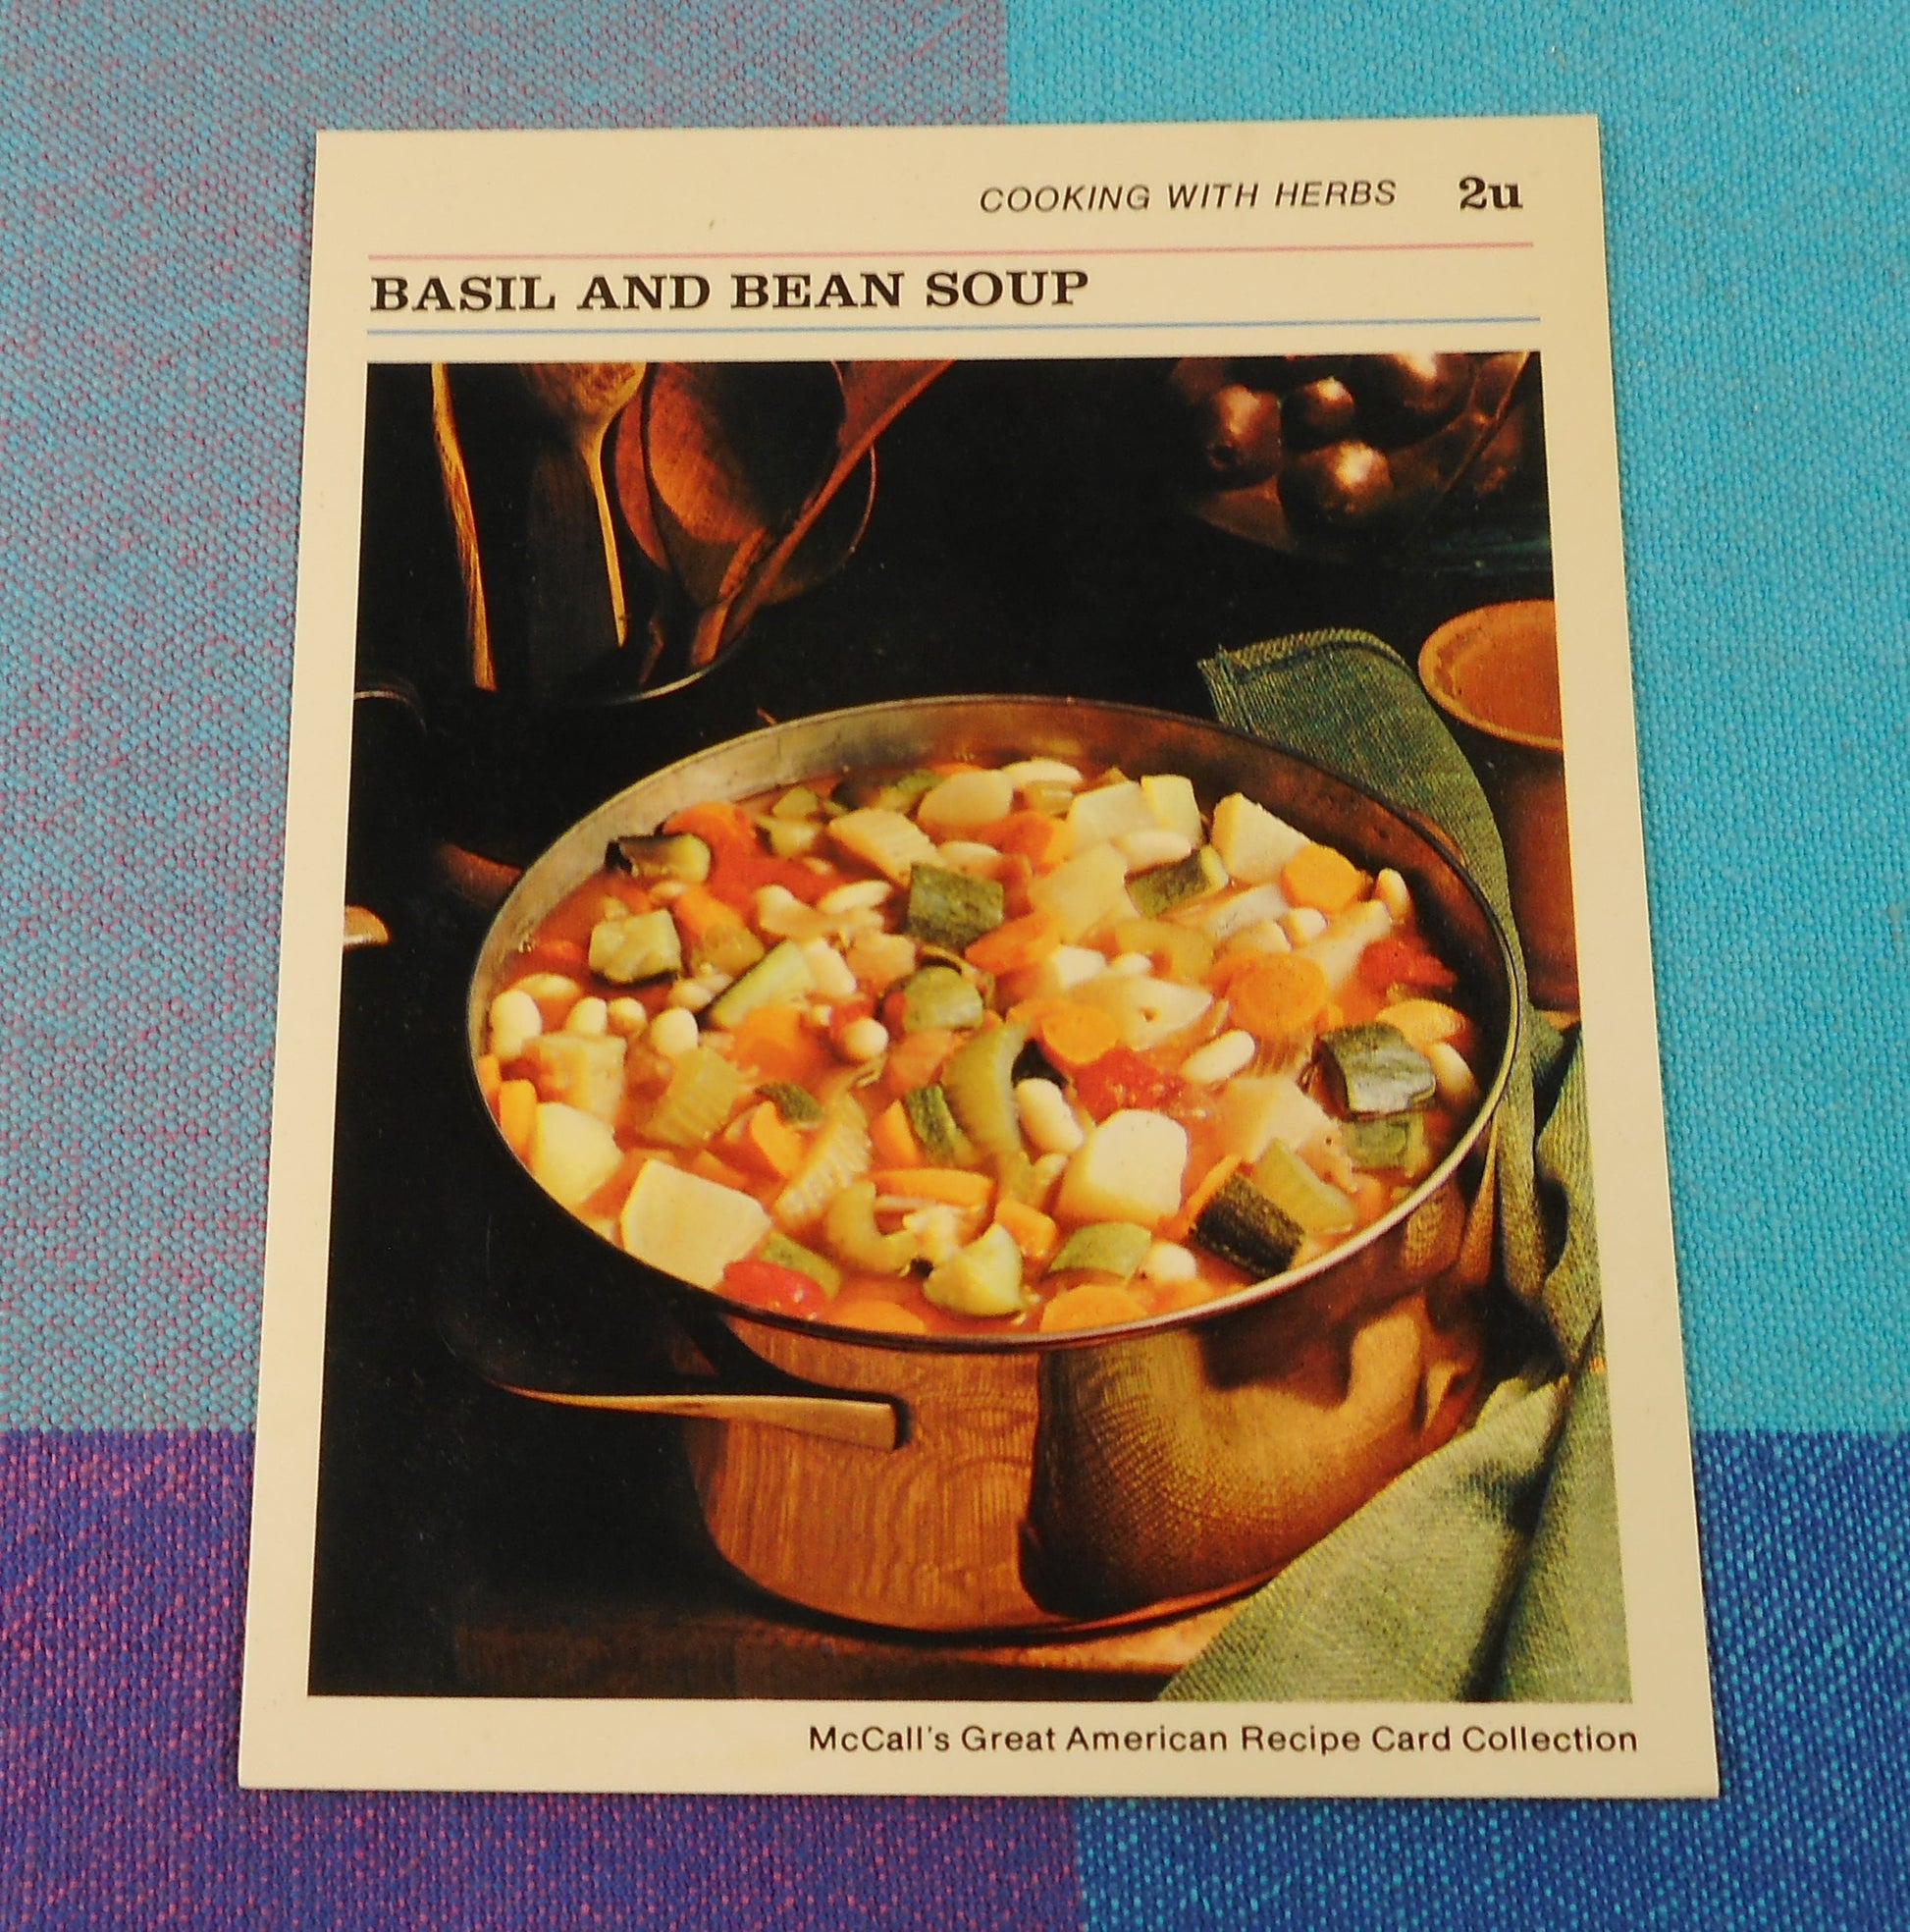 McCall" Great American Recipe Card 1973 - Dansk Quistgaard's Copper Cookware